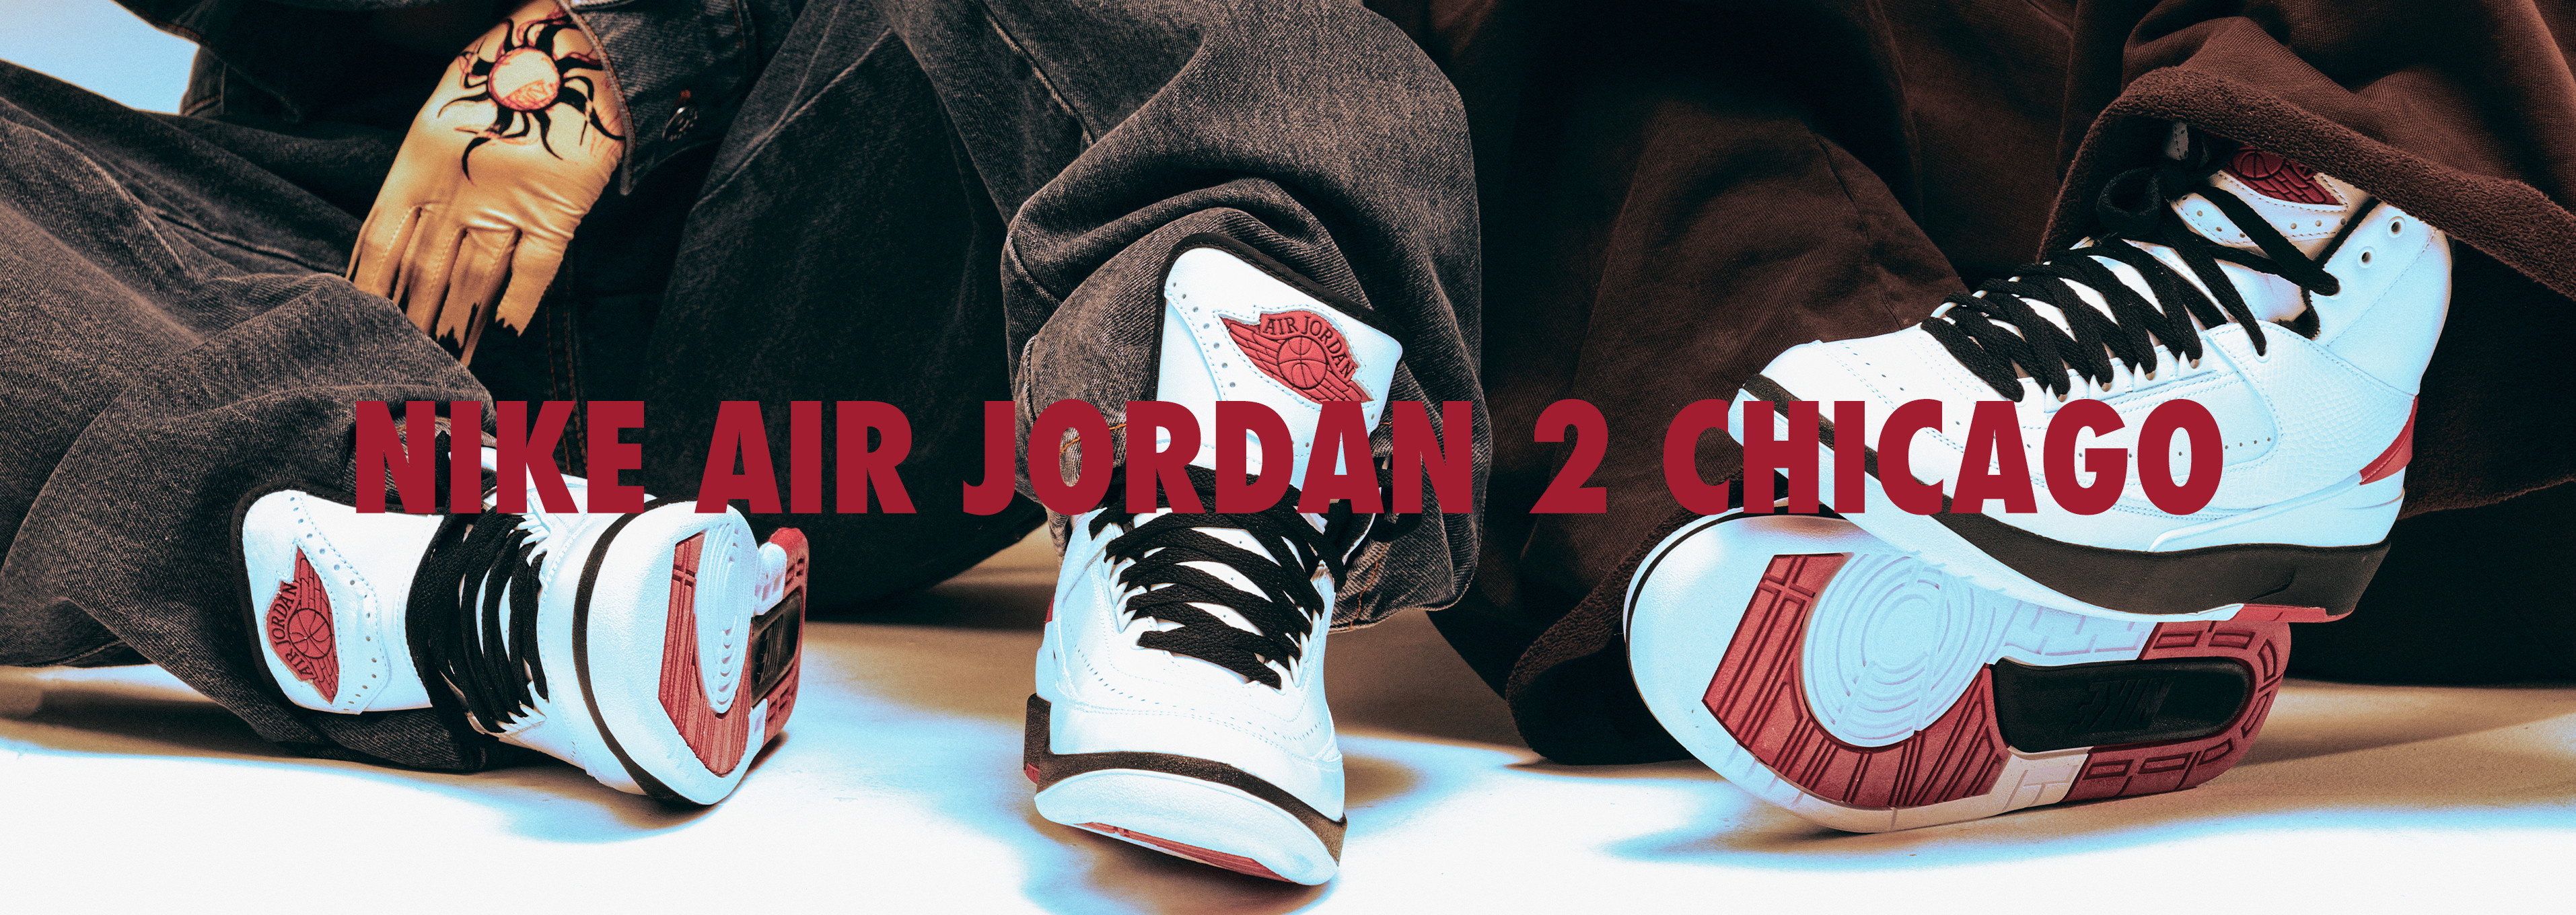 The Return of the Nike Air Jordan 2 “Chicago”